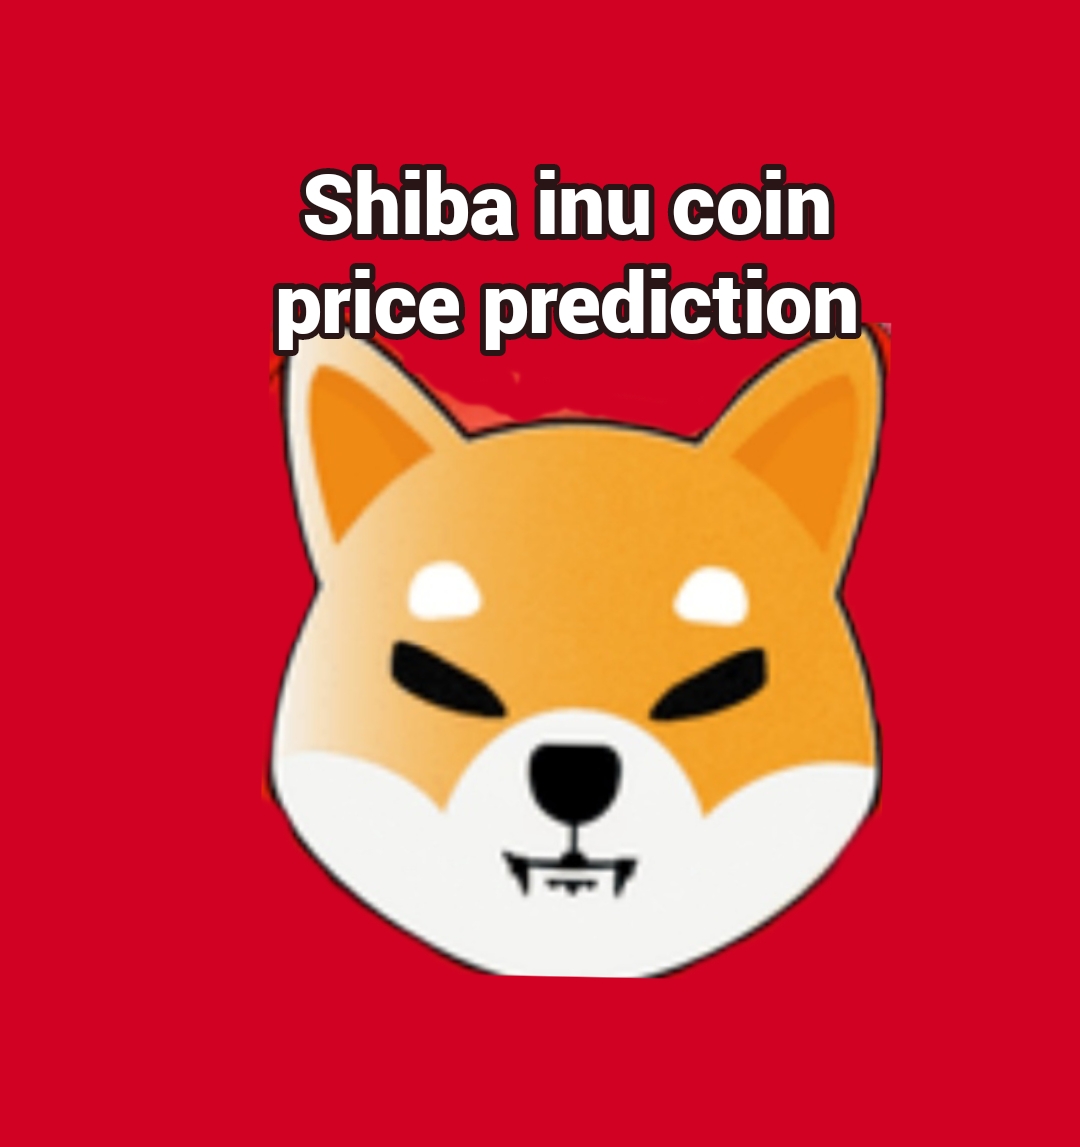 SHIBA INU COIN PRICE PREDICTION